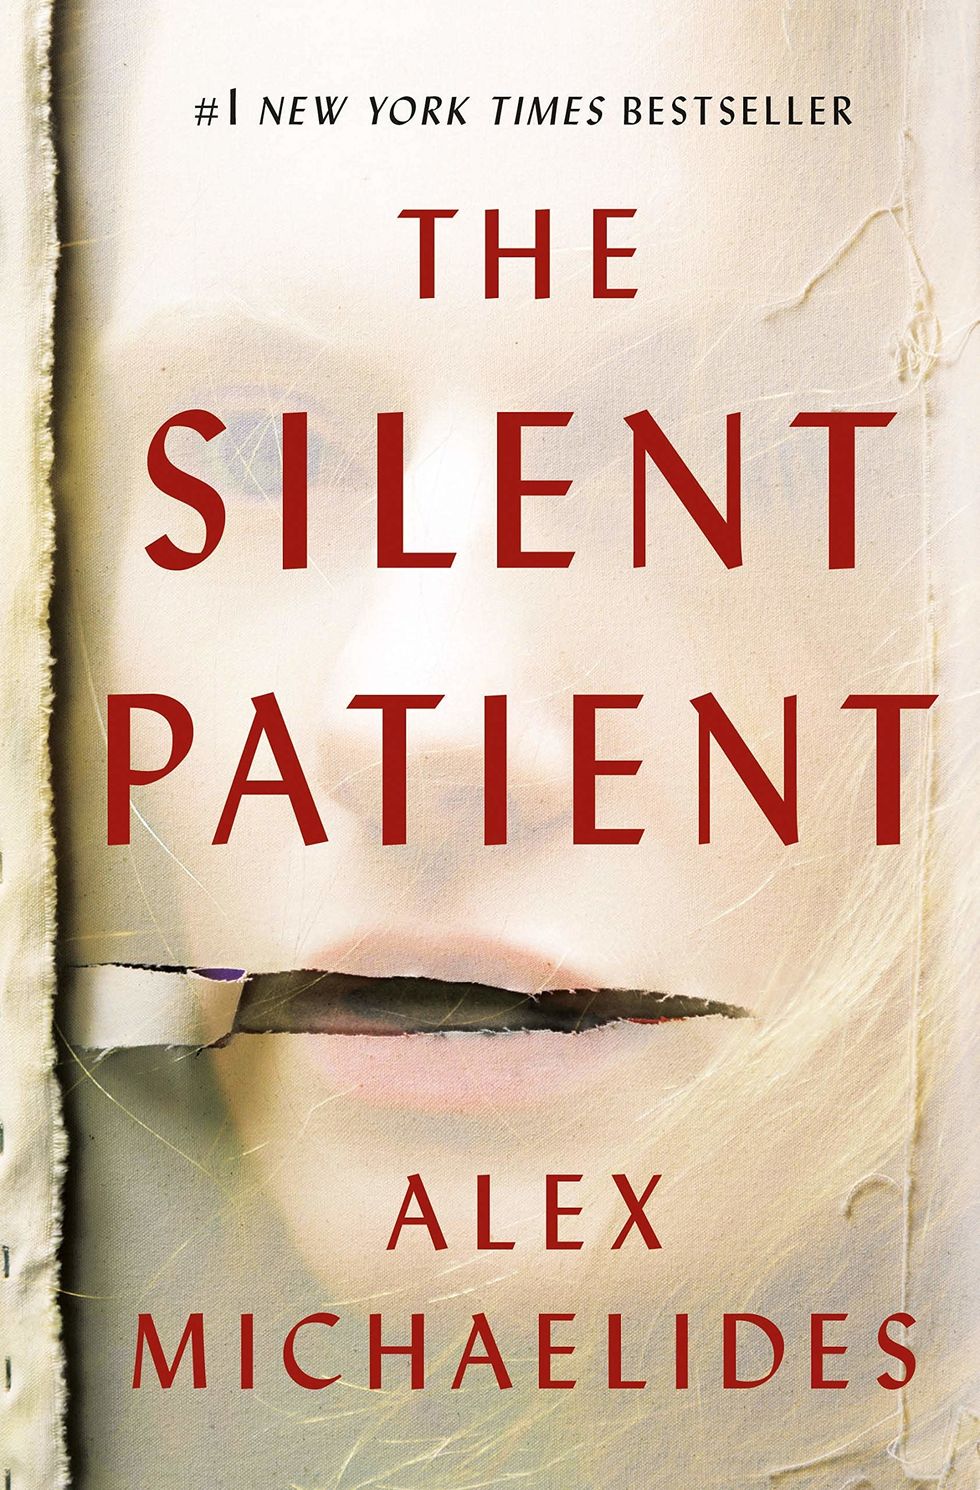 "The Silent Patient" by Alex Michaelides Is The Best Summer Thriller